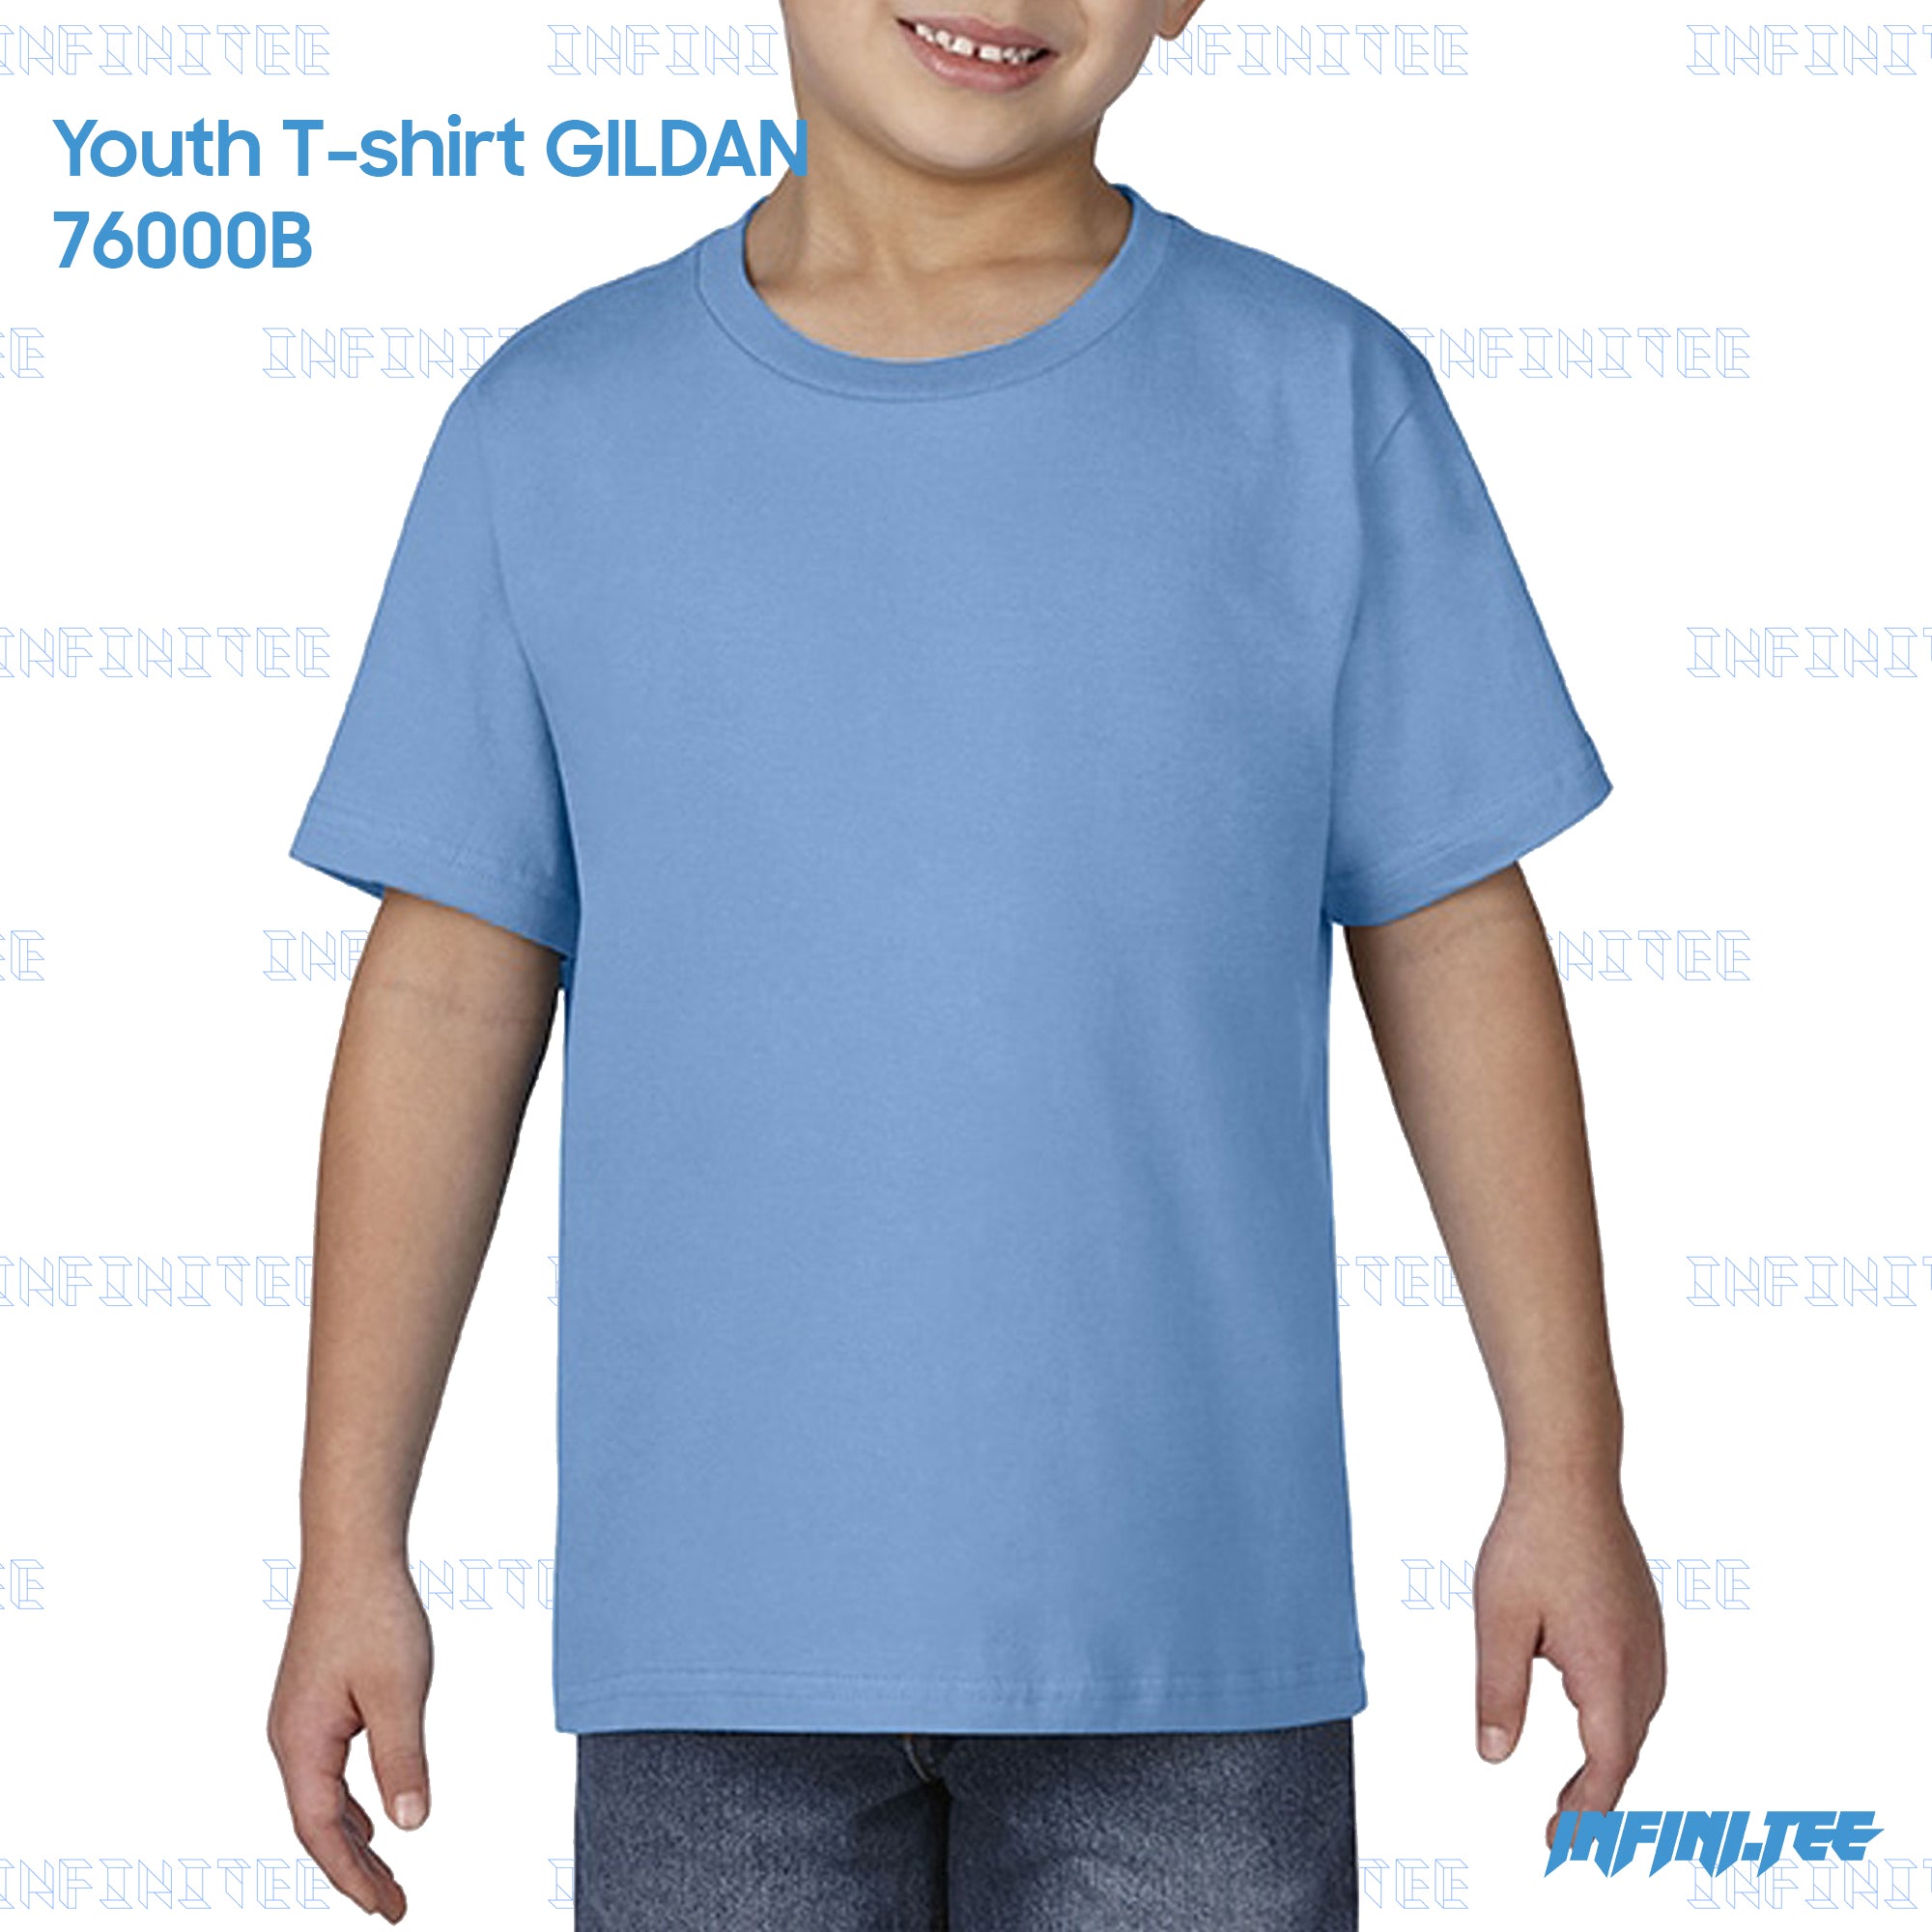 Youth T-shirt 76000B GILDAN - CAROLINA BLUE